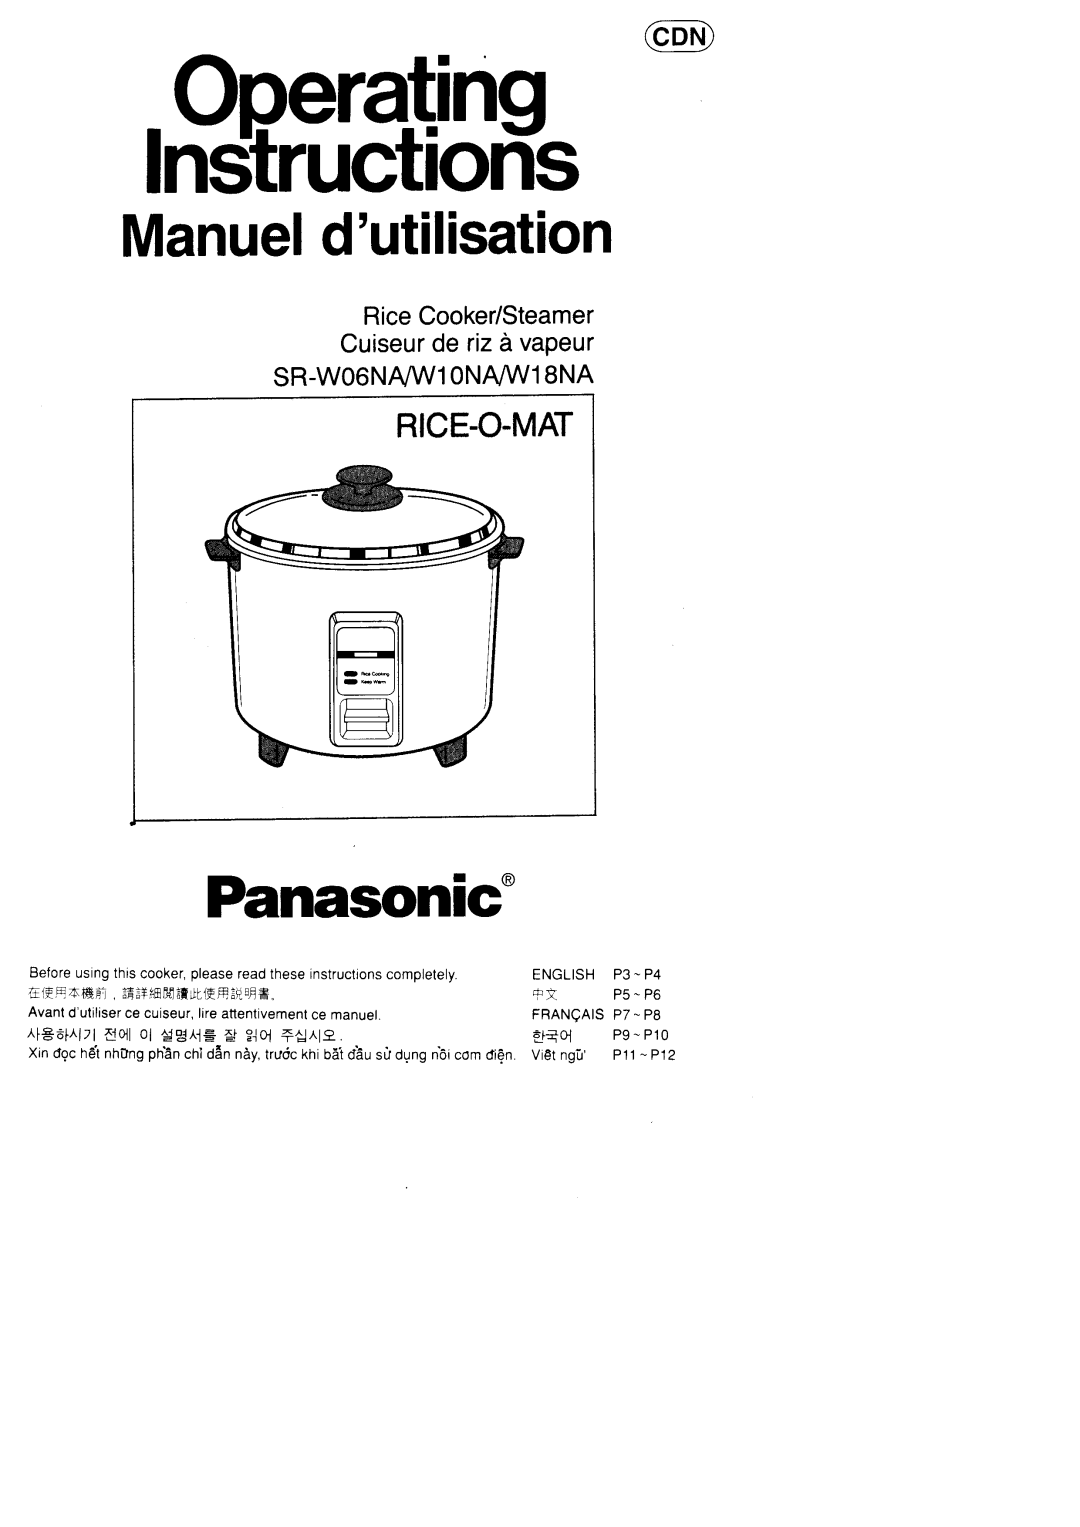 Panasonic manuel dutilisation Rice-O-Mat, RiceCooke/Steamer Cuiseurde rizi vapeur, SR-WO6NF/W1ONAM18NA, lE6l . l7l 